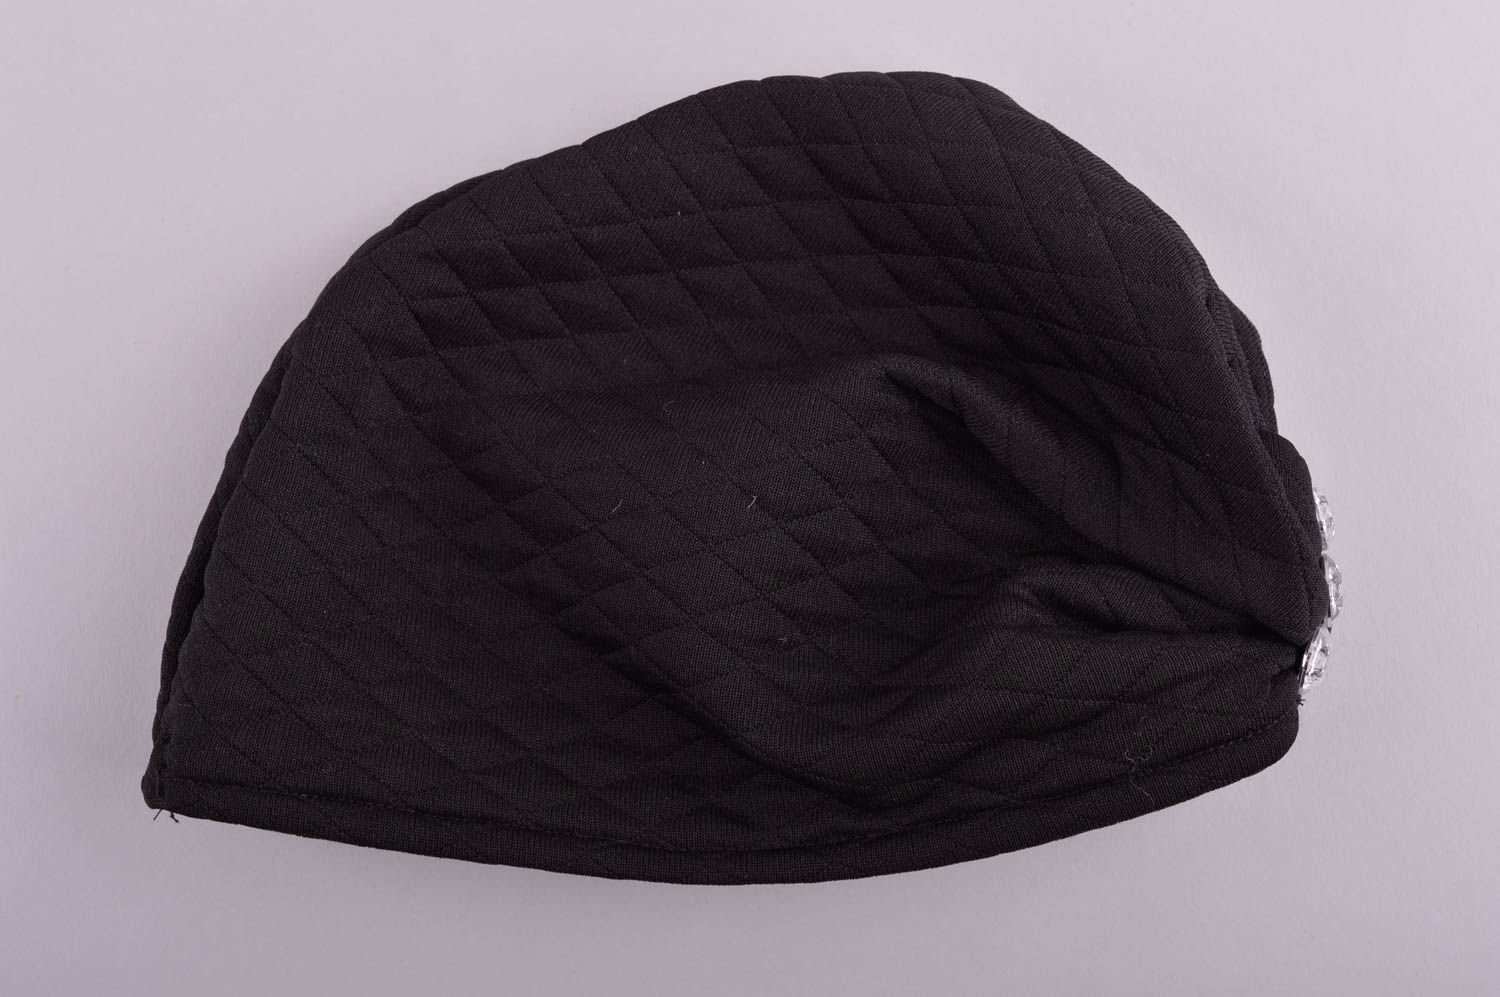 Handmade winter hat fabric hats black warm hat winter accessories for women photo 3